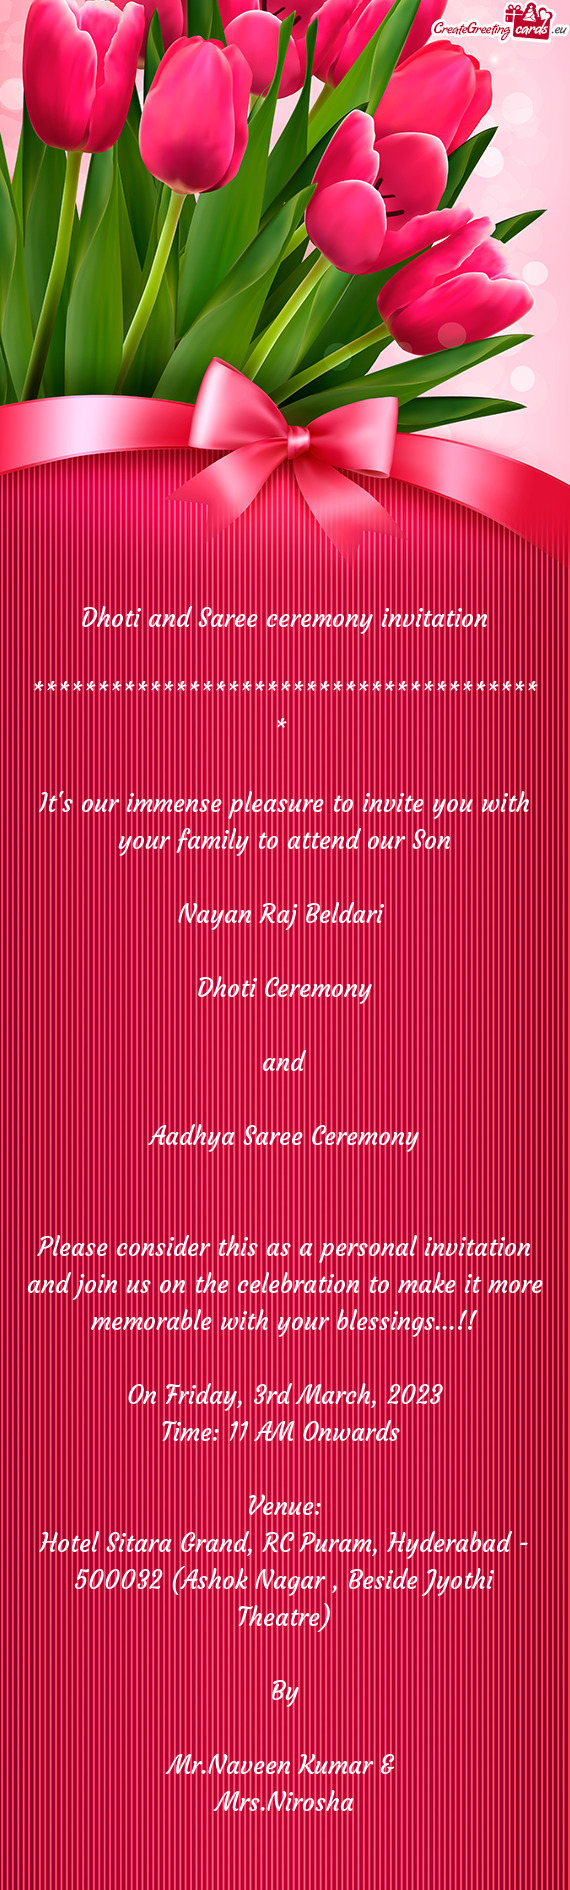 Aadhya Saree Ceremony